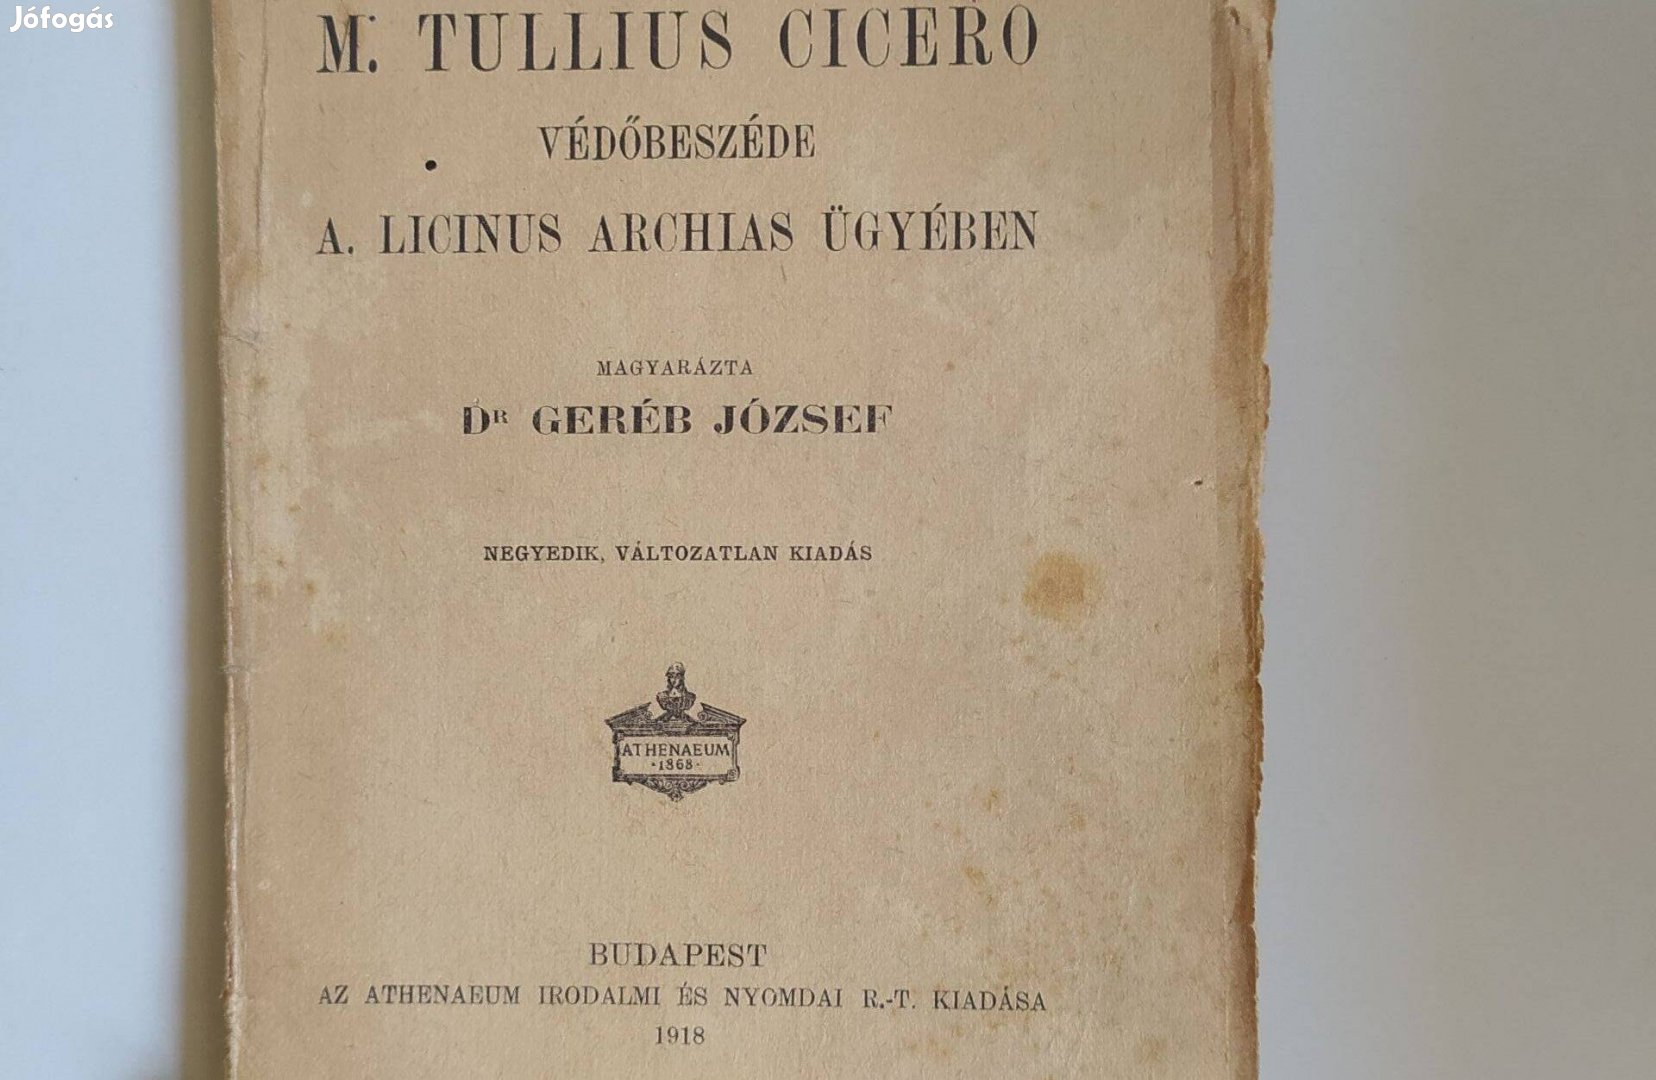 M. Tullius Cicero védőbeszéde A. Licinus Archias ügyében 1918